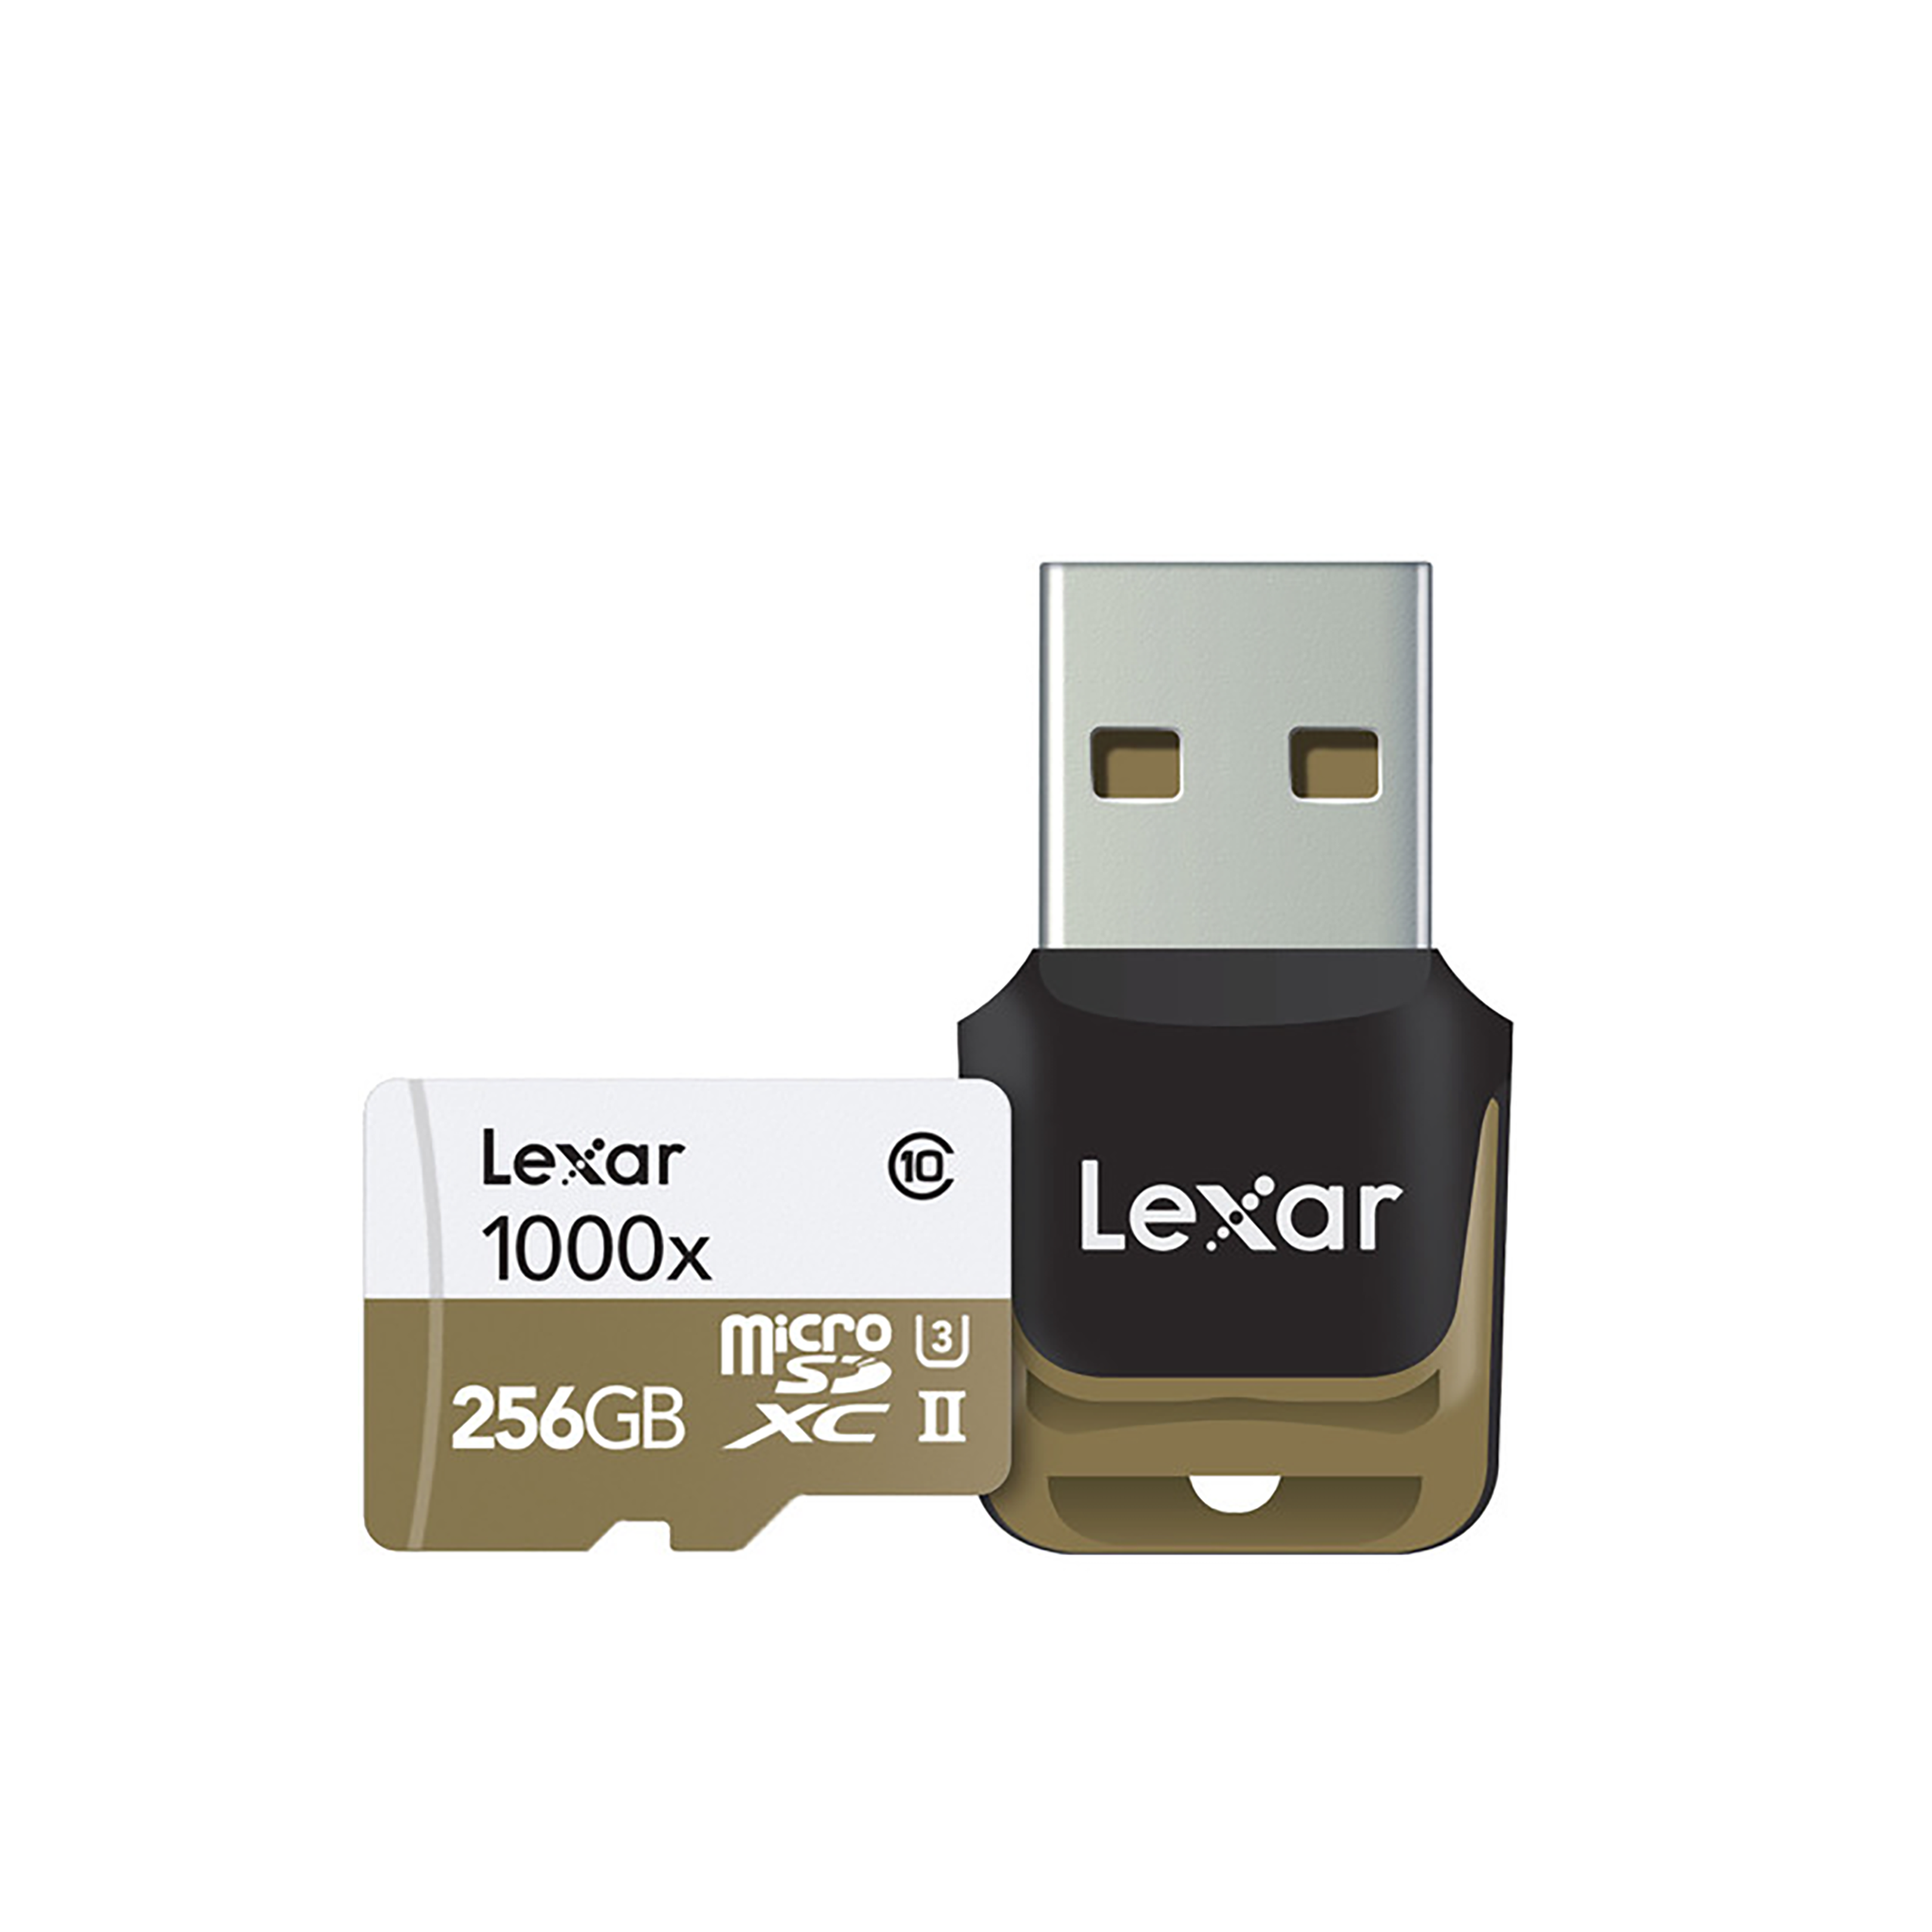 Lexar 256GB Professional 1000x microSDXC UHS-II Memory Card with USB 3.0 Card Reader